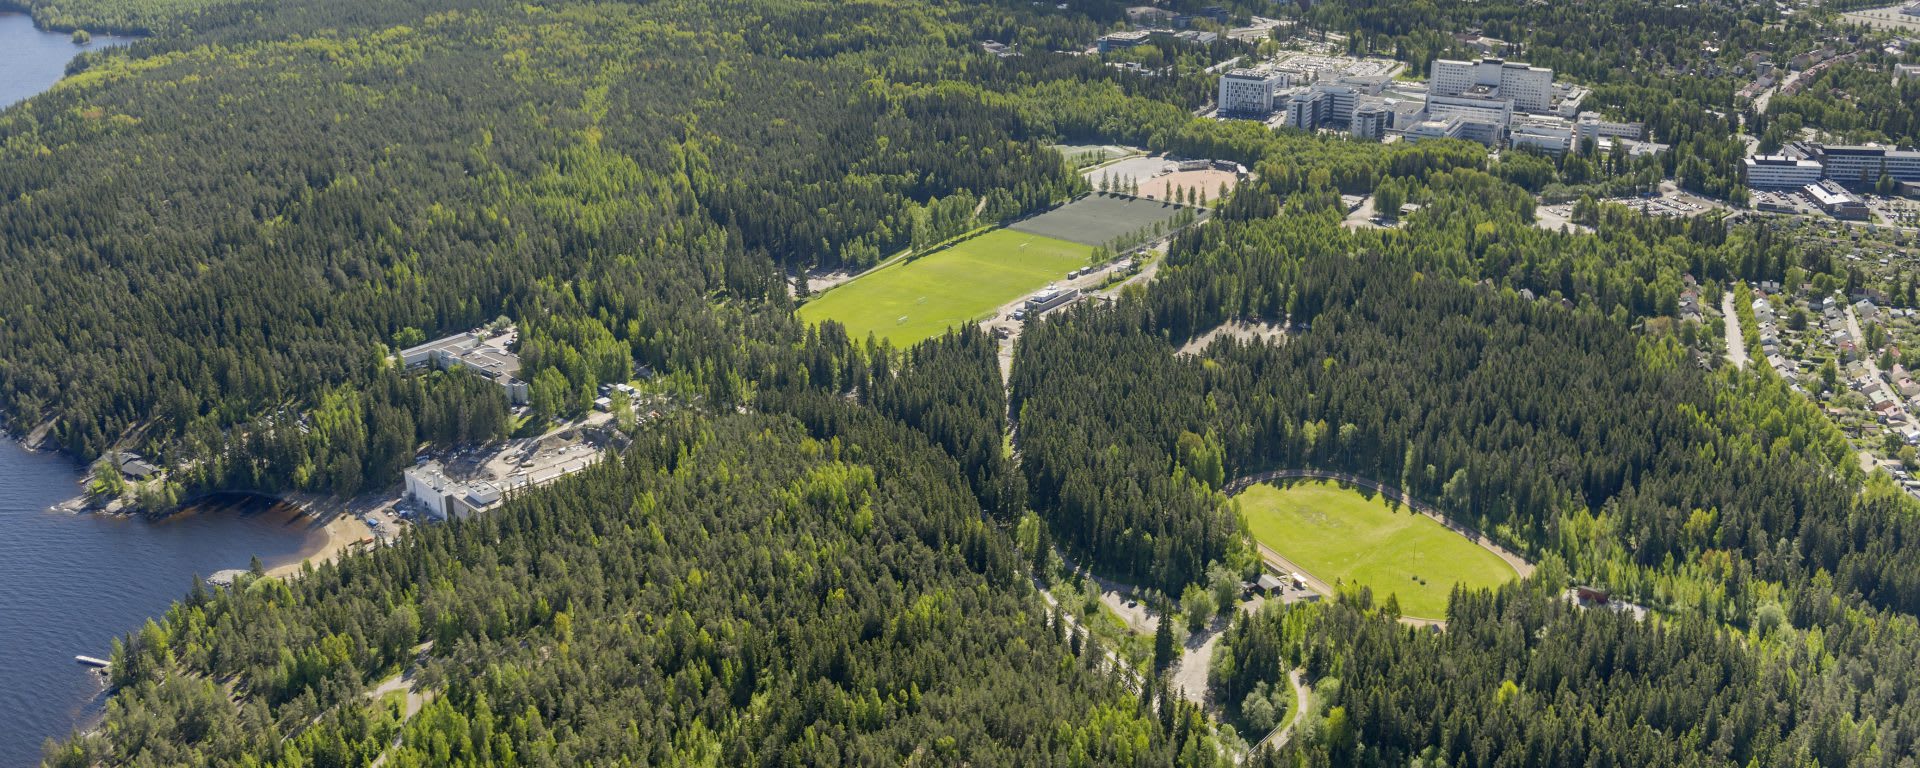 Kauppi Sports park area from above